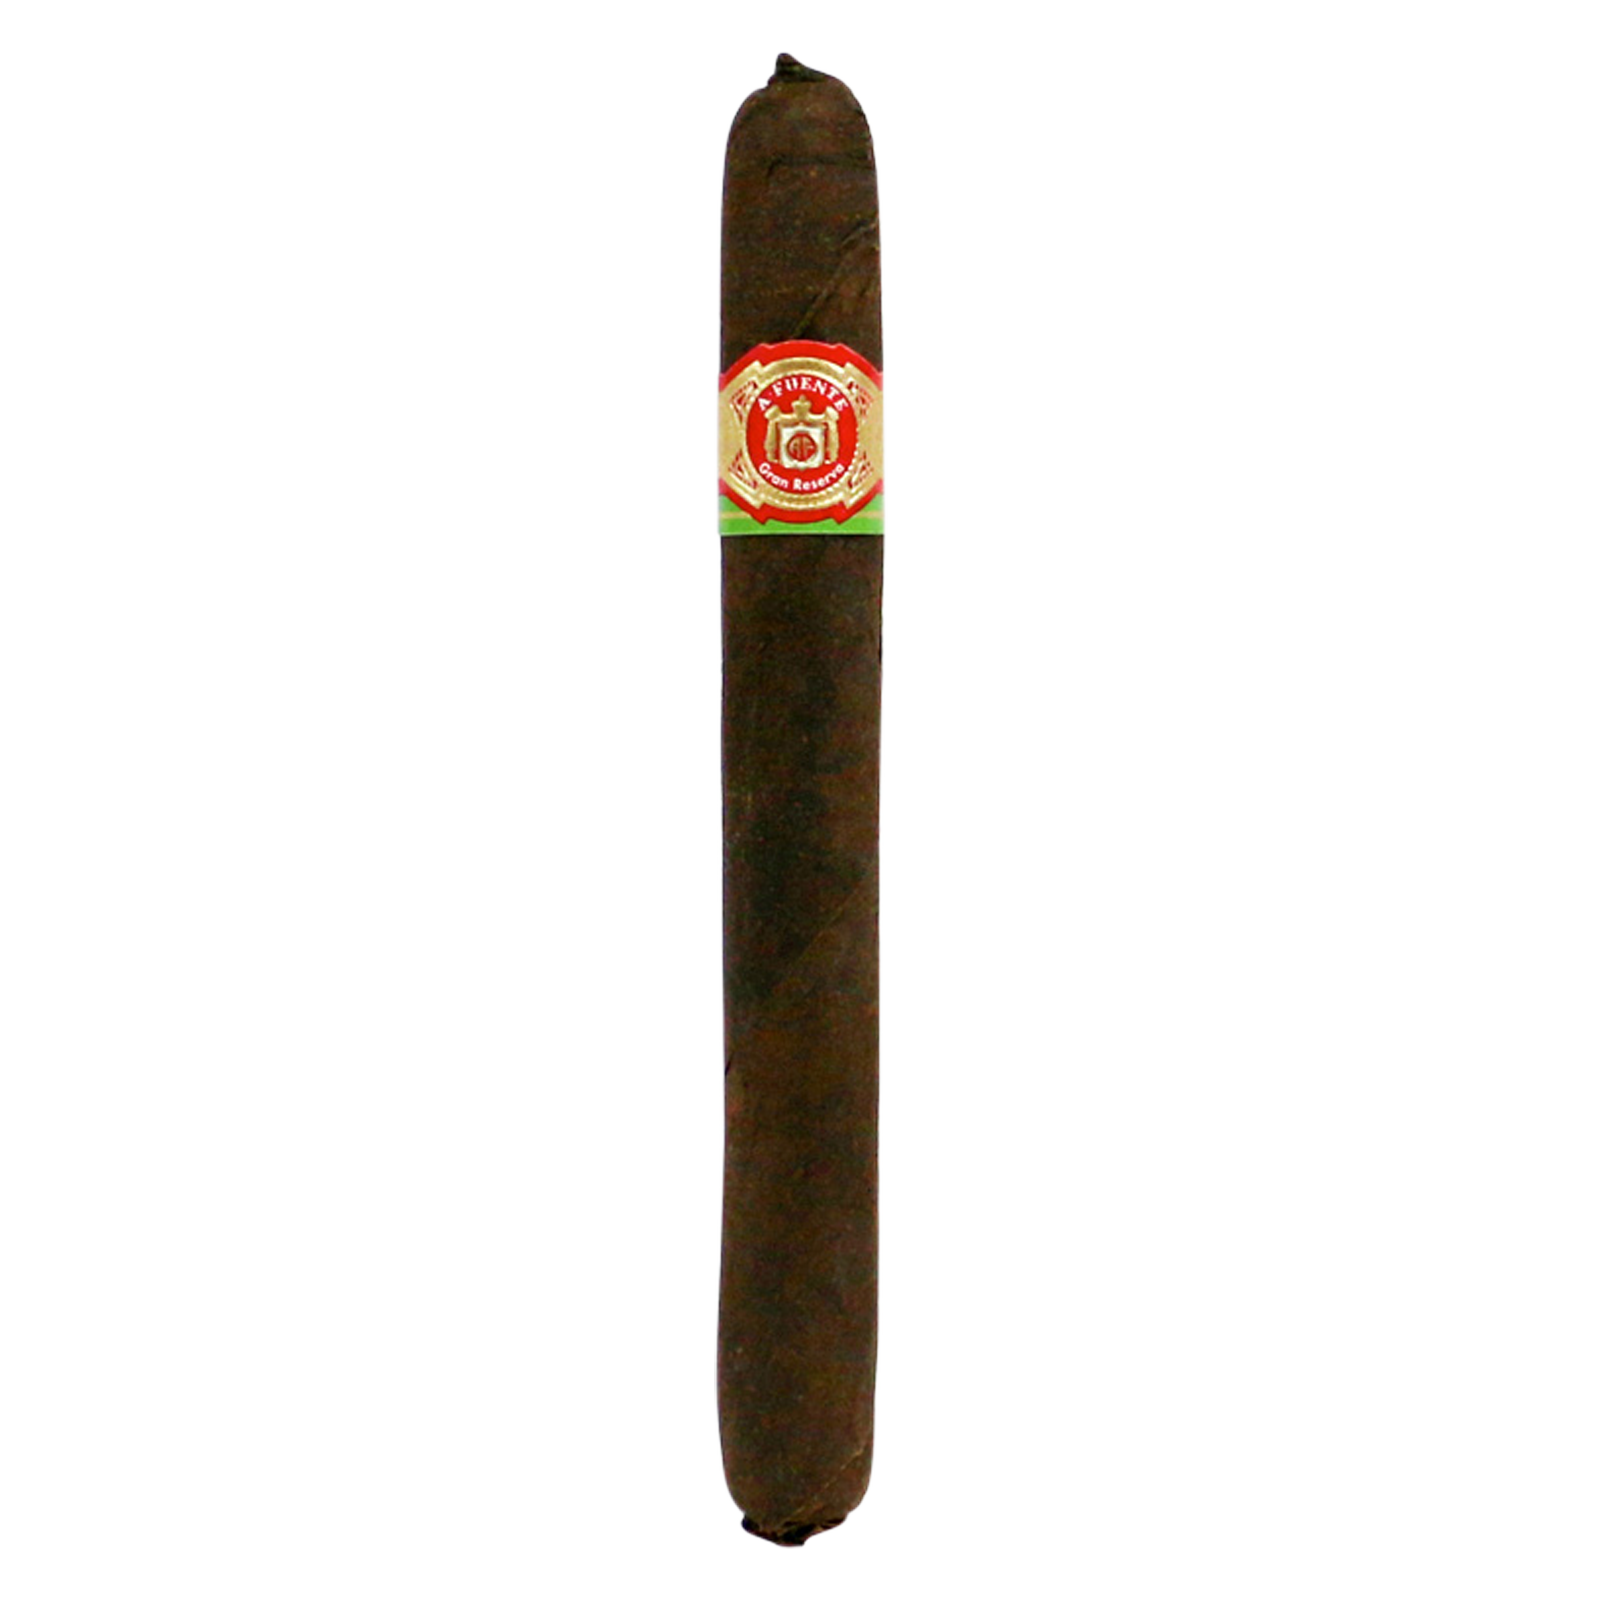 Arturo Fuente Exquisito Maduro Cigar 4.5in 1ct